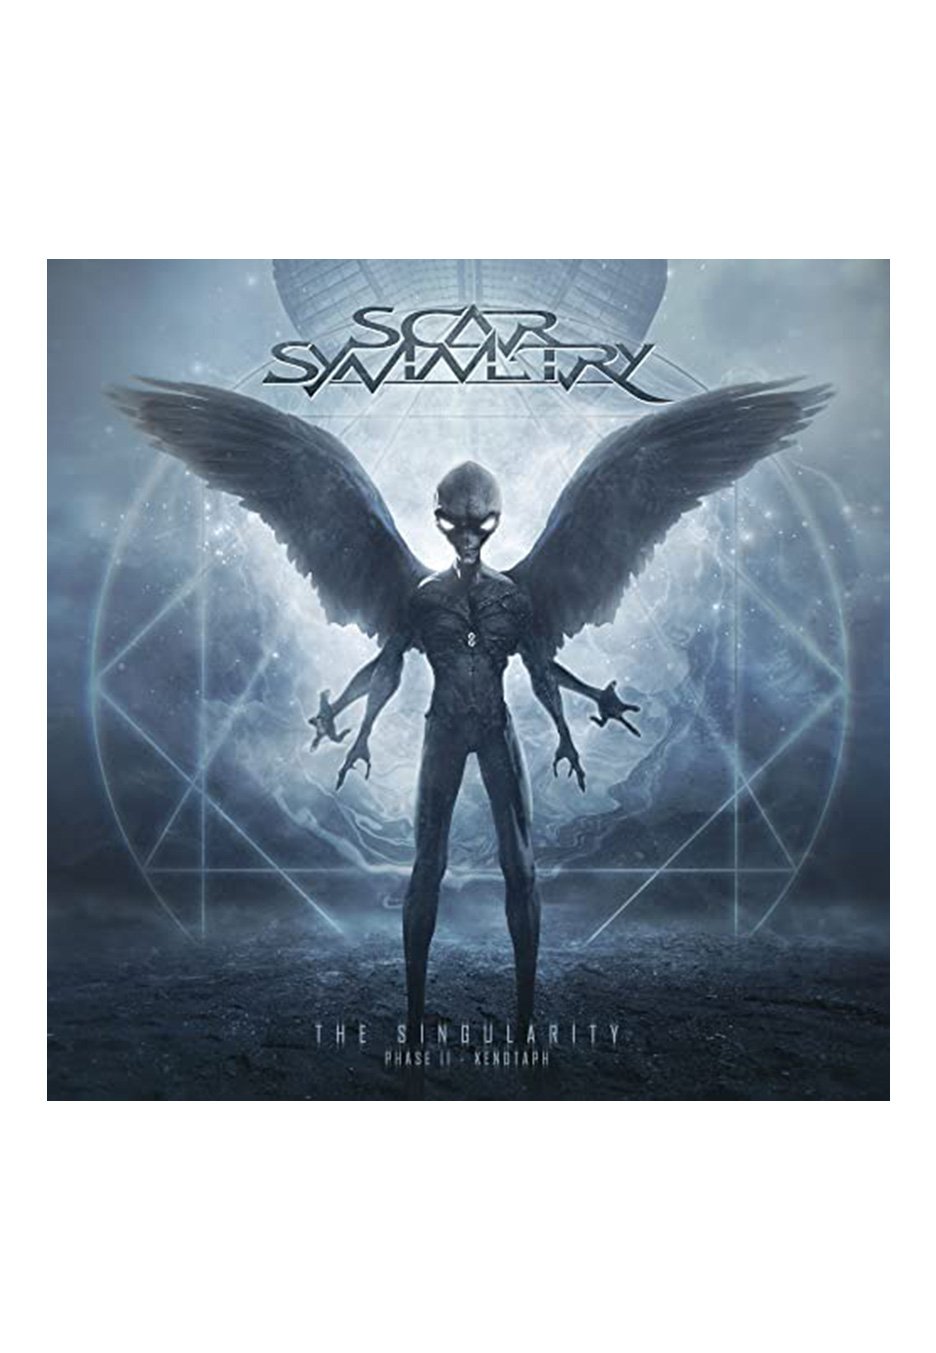 Scar Symmetry - The Singularity Phase II-Xenotaph - CD